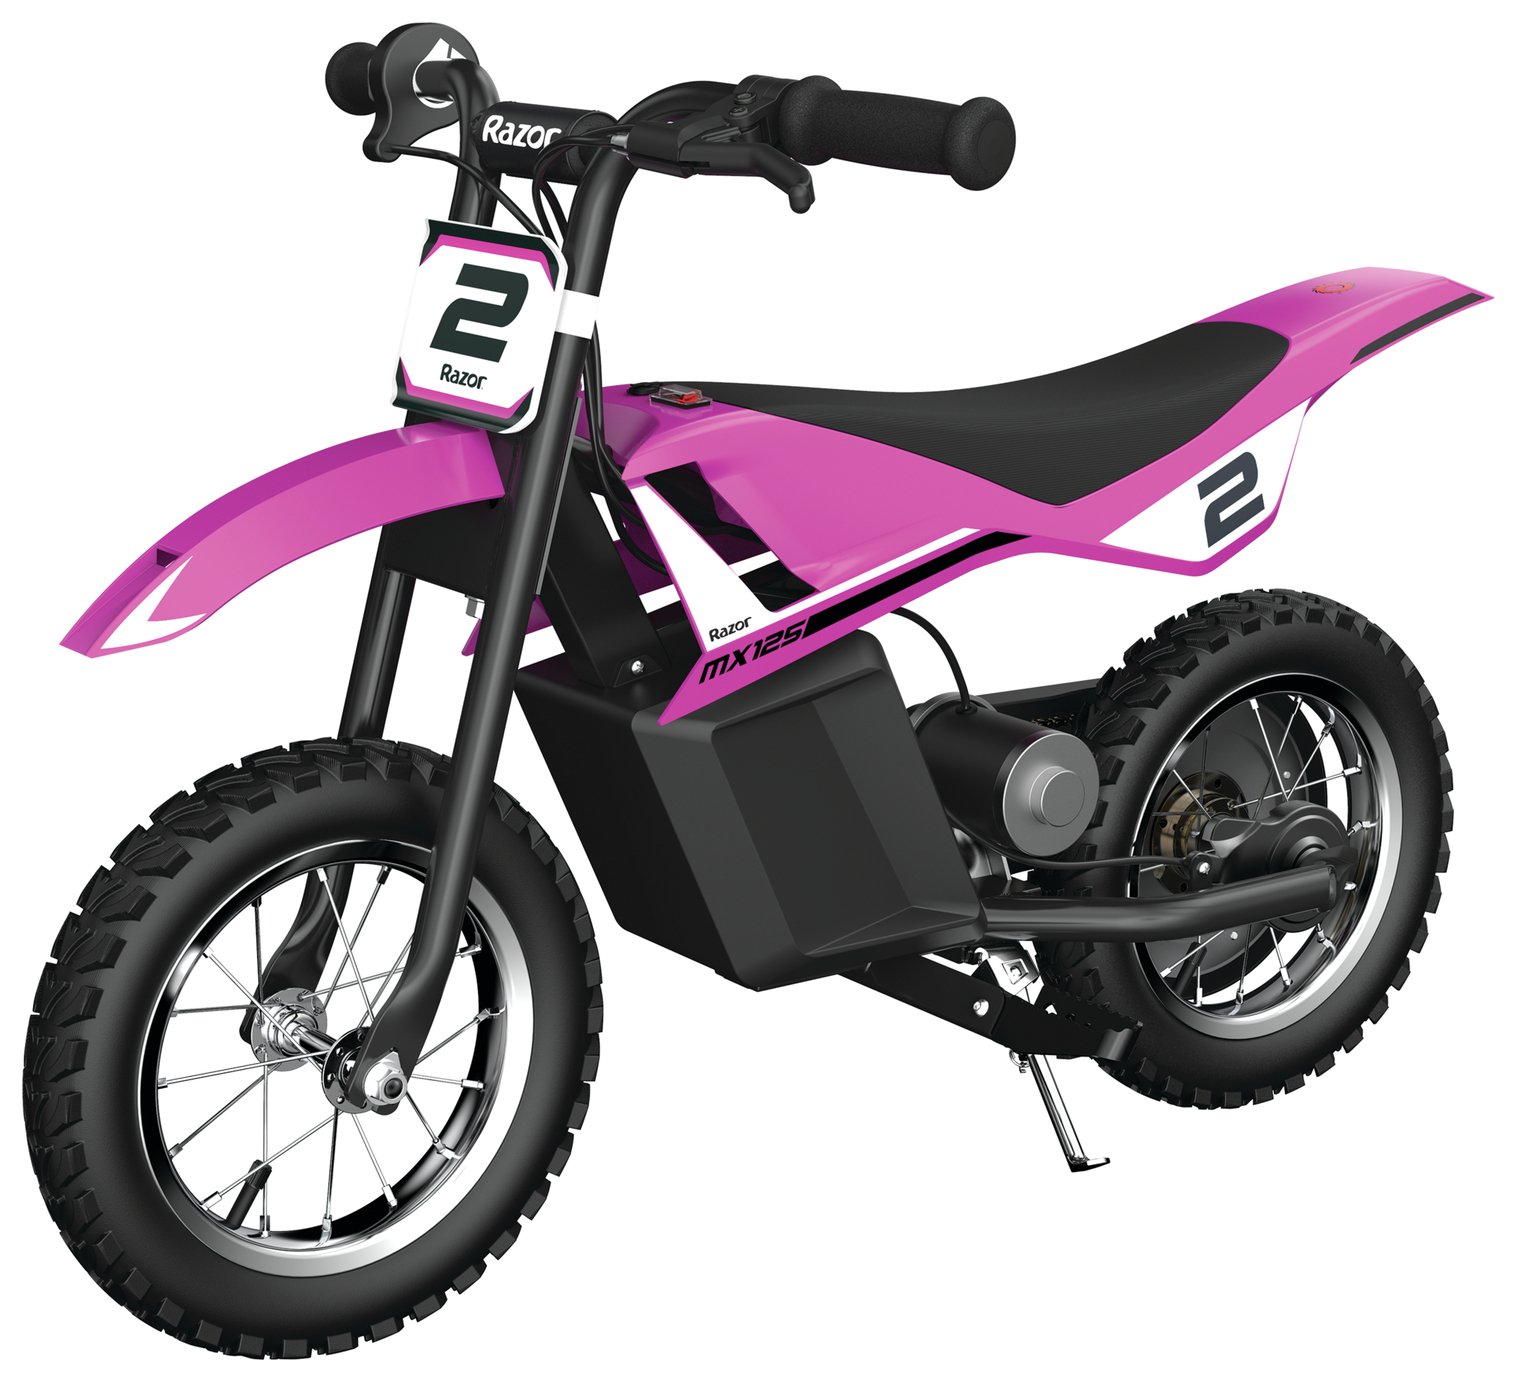 Razor MX125 Electric Dirt Bike Motorbike for Kids - Pink